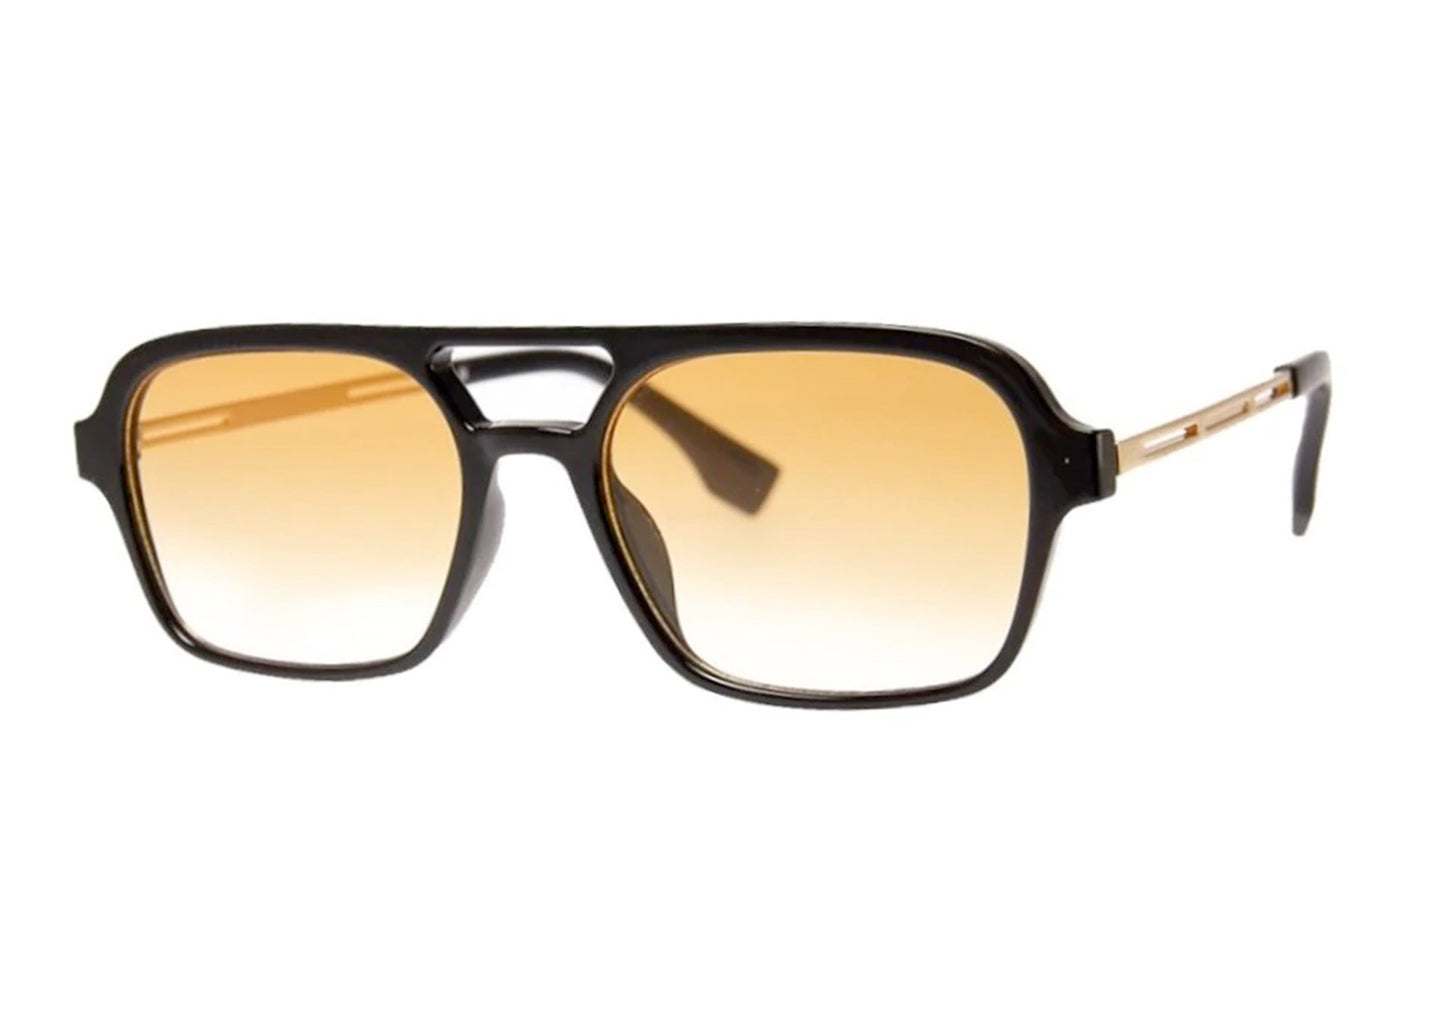 Overland Sunglasses in Black/Amber